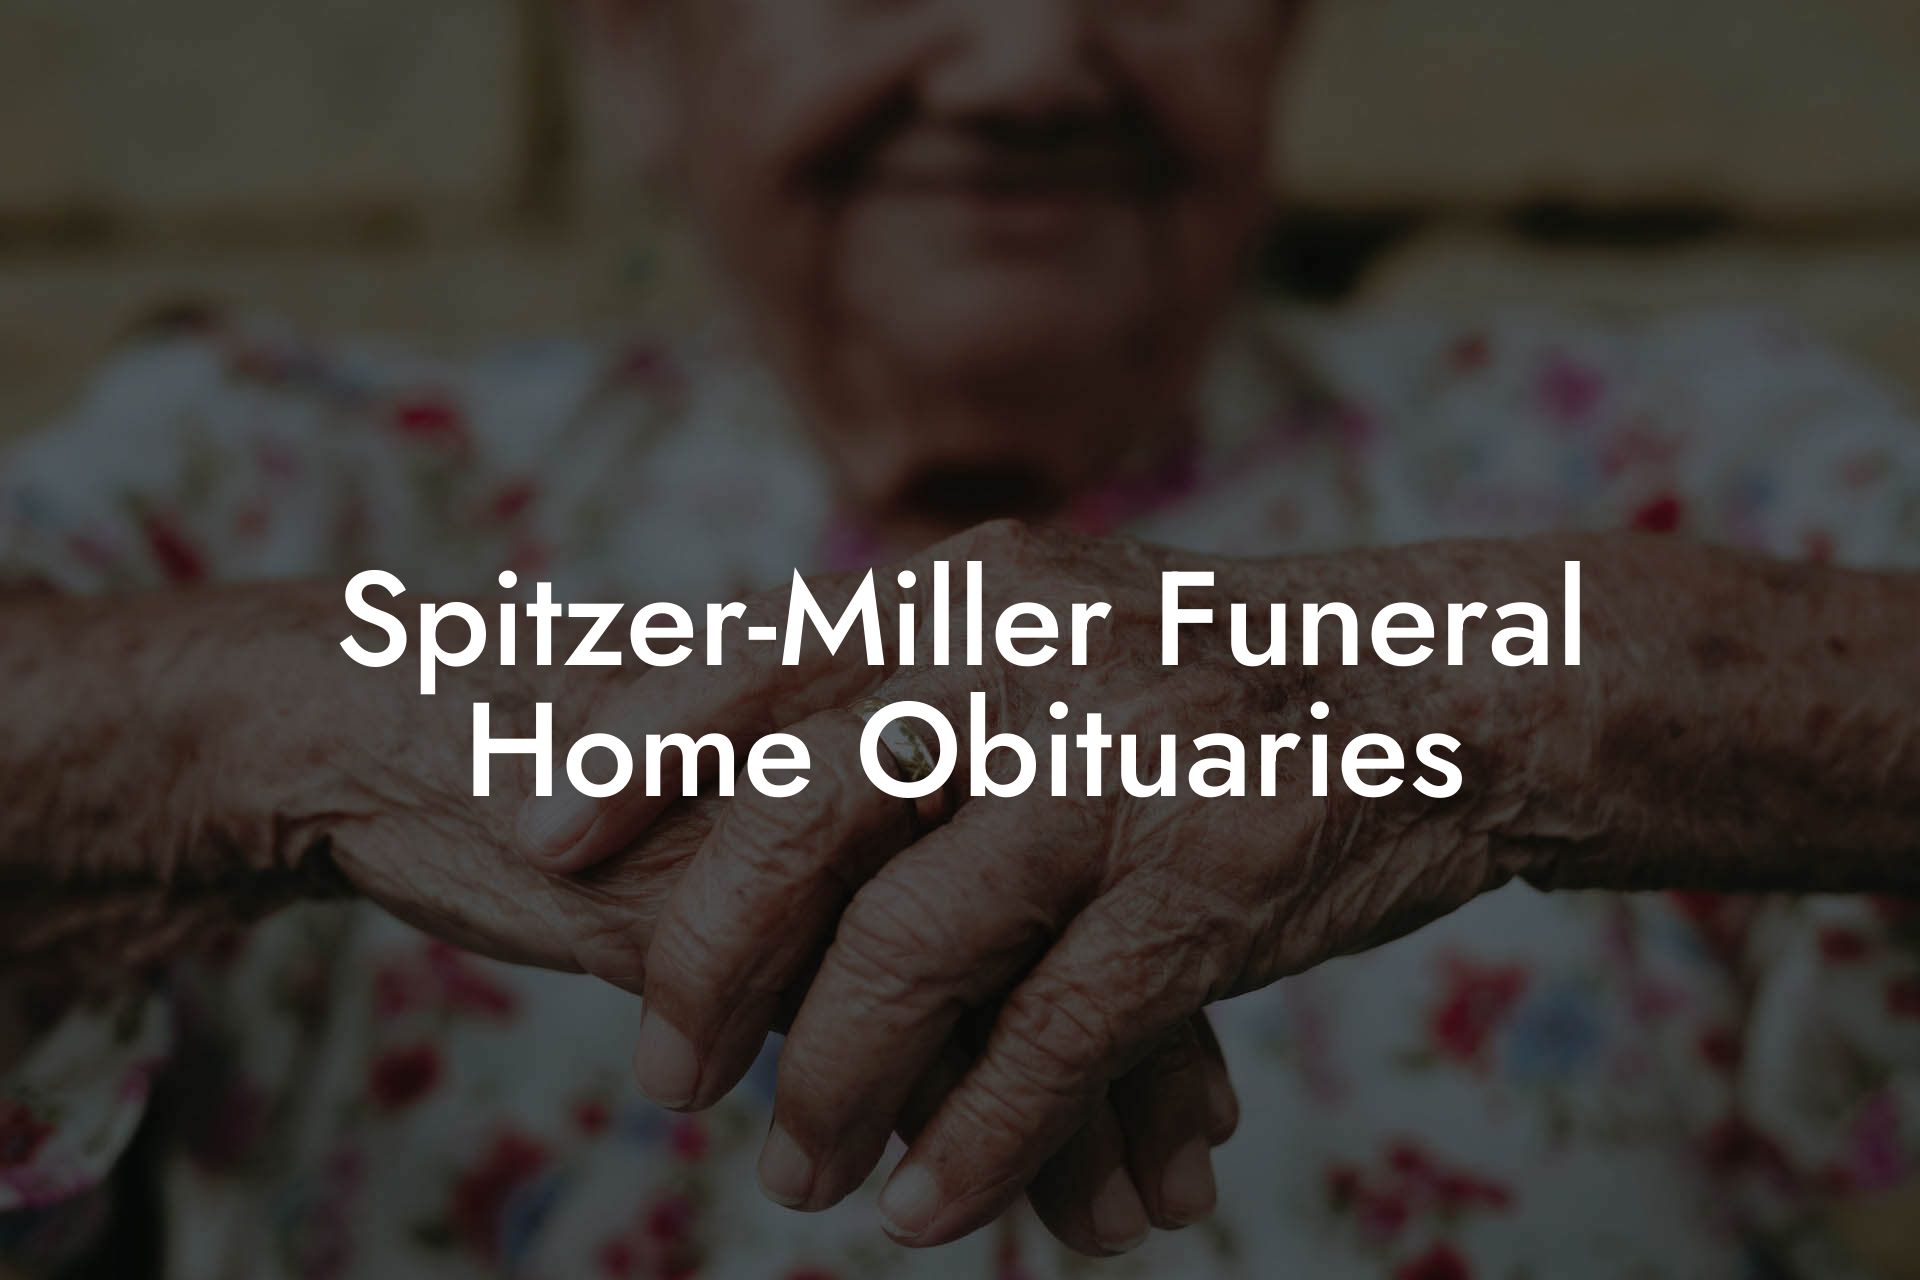 Spitzer-Miller Funeral Home Obituaries